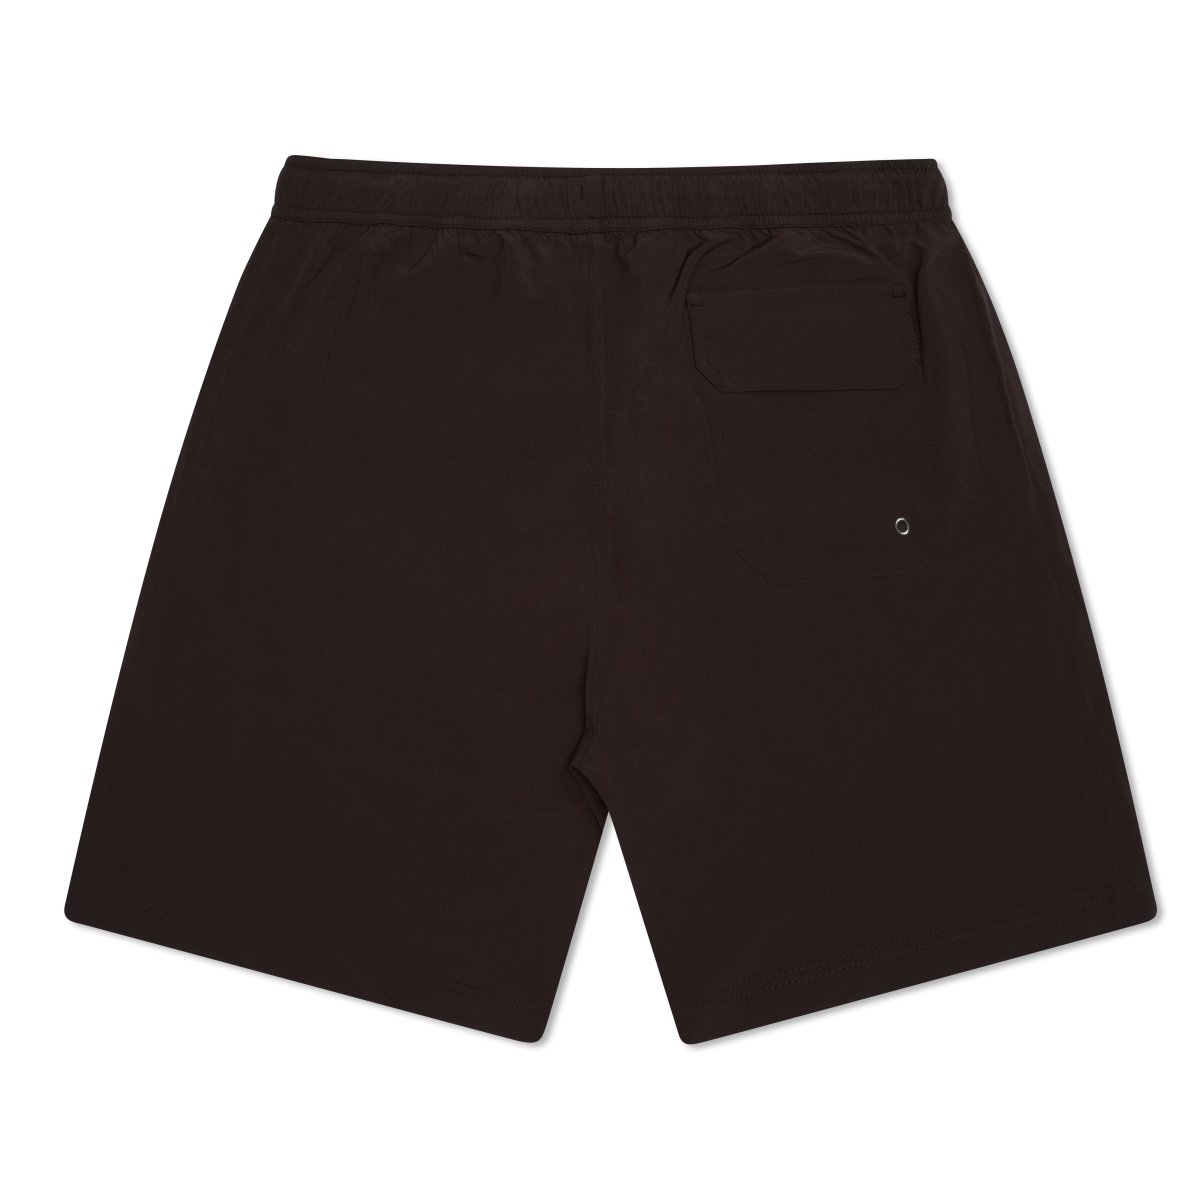 Tunnel Vision 9” - Brown Shorts - Bamboo Ave. - Men's Shorts